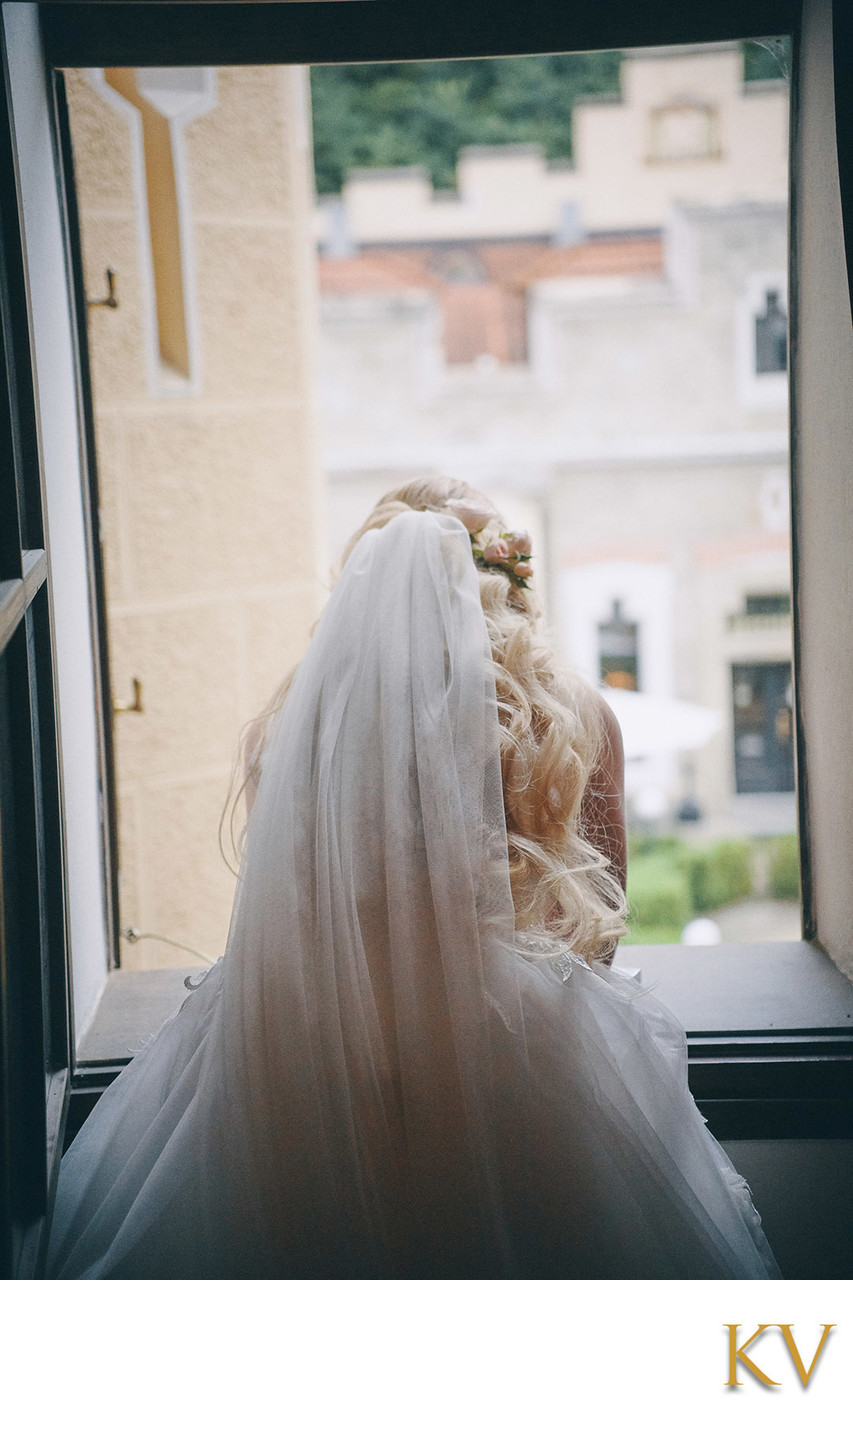 Hluboka nad Vltavou Castle wedding bride window